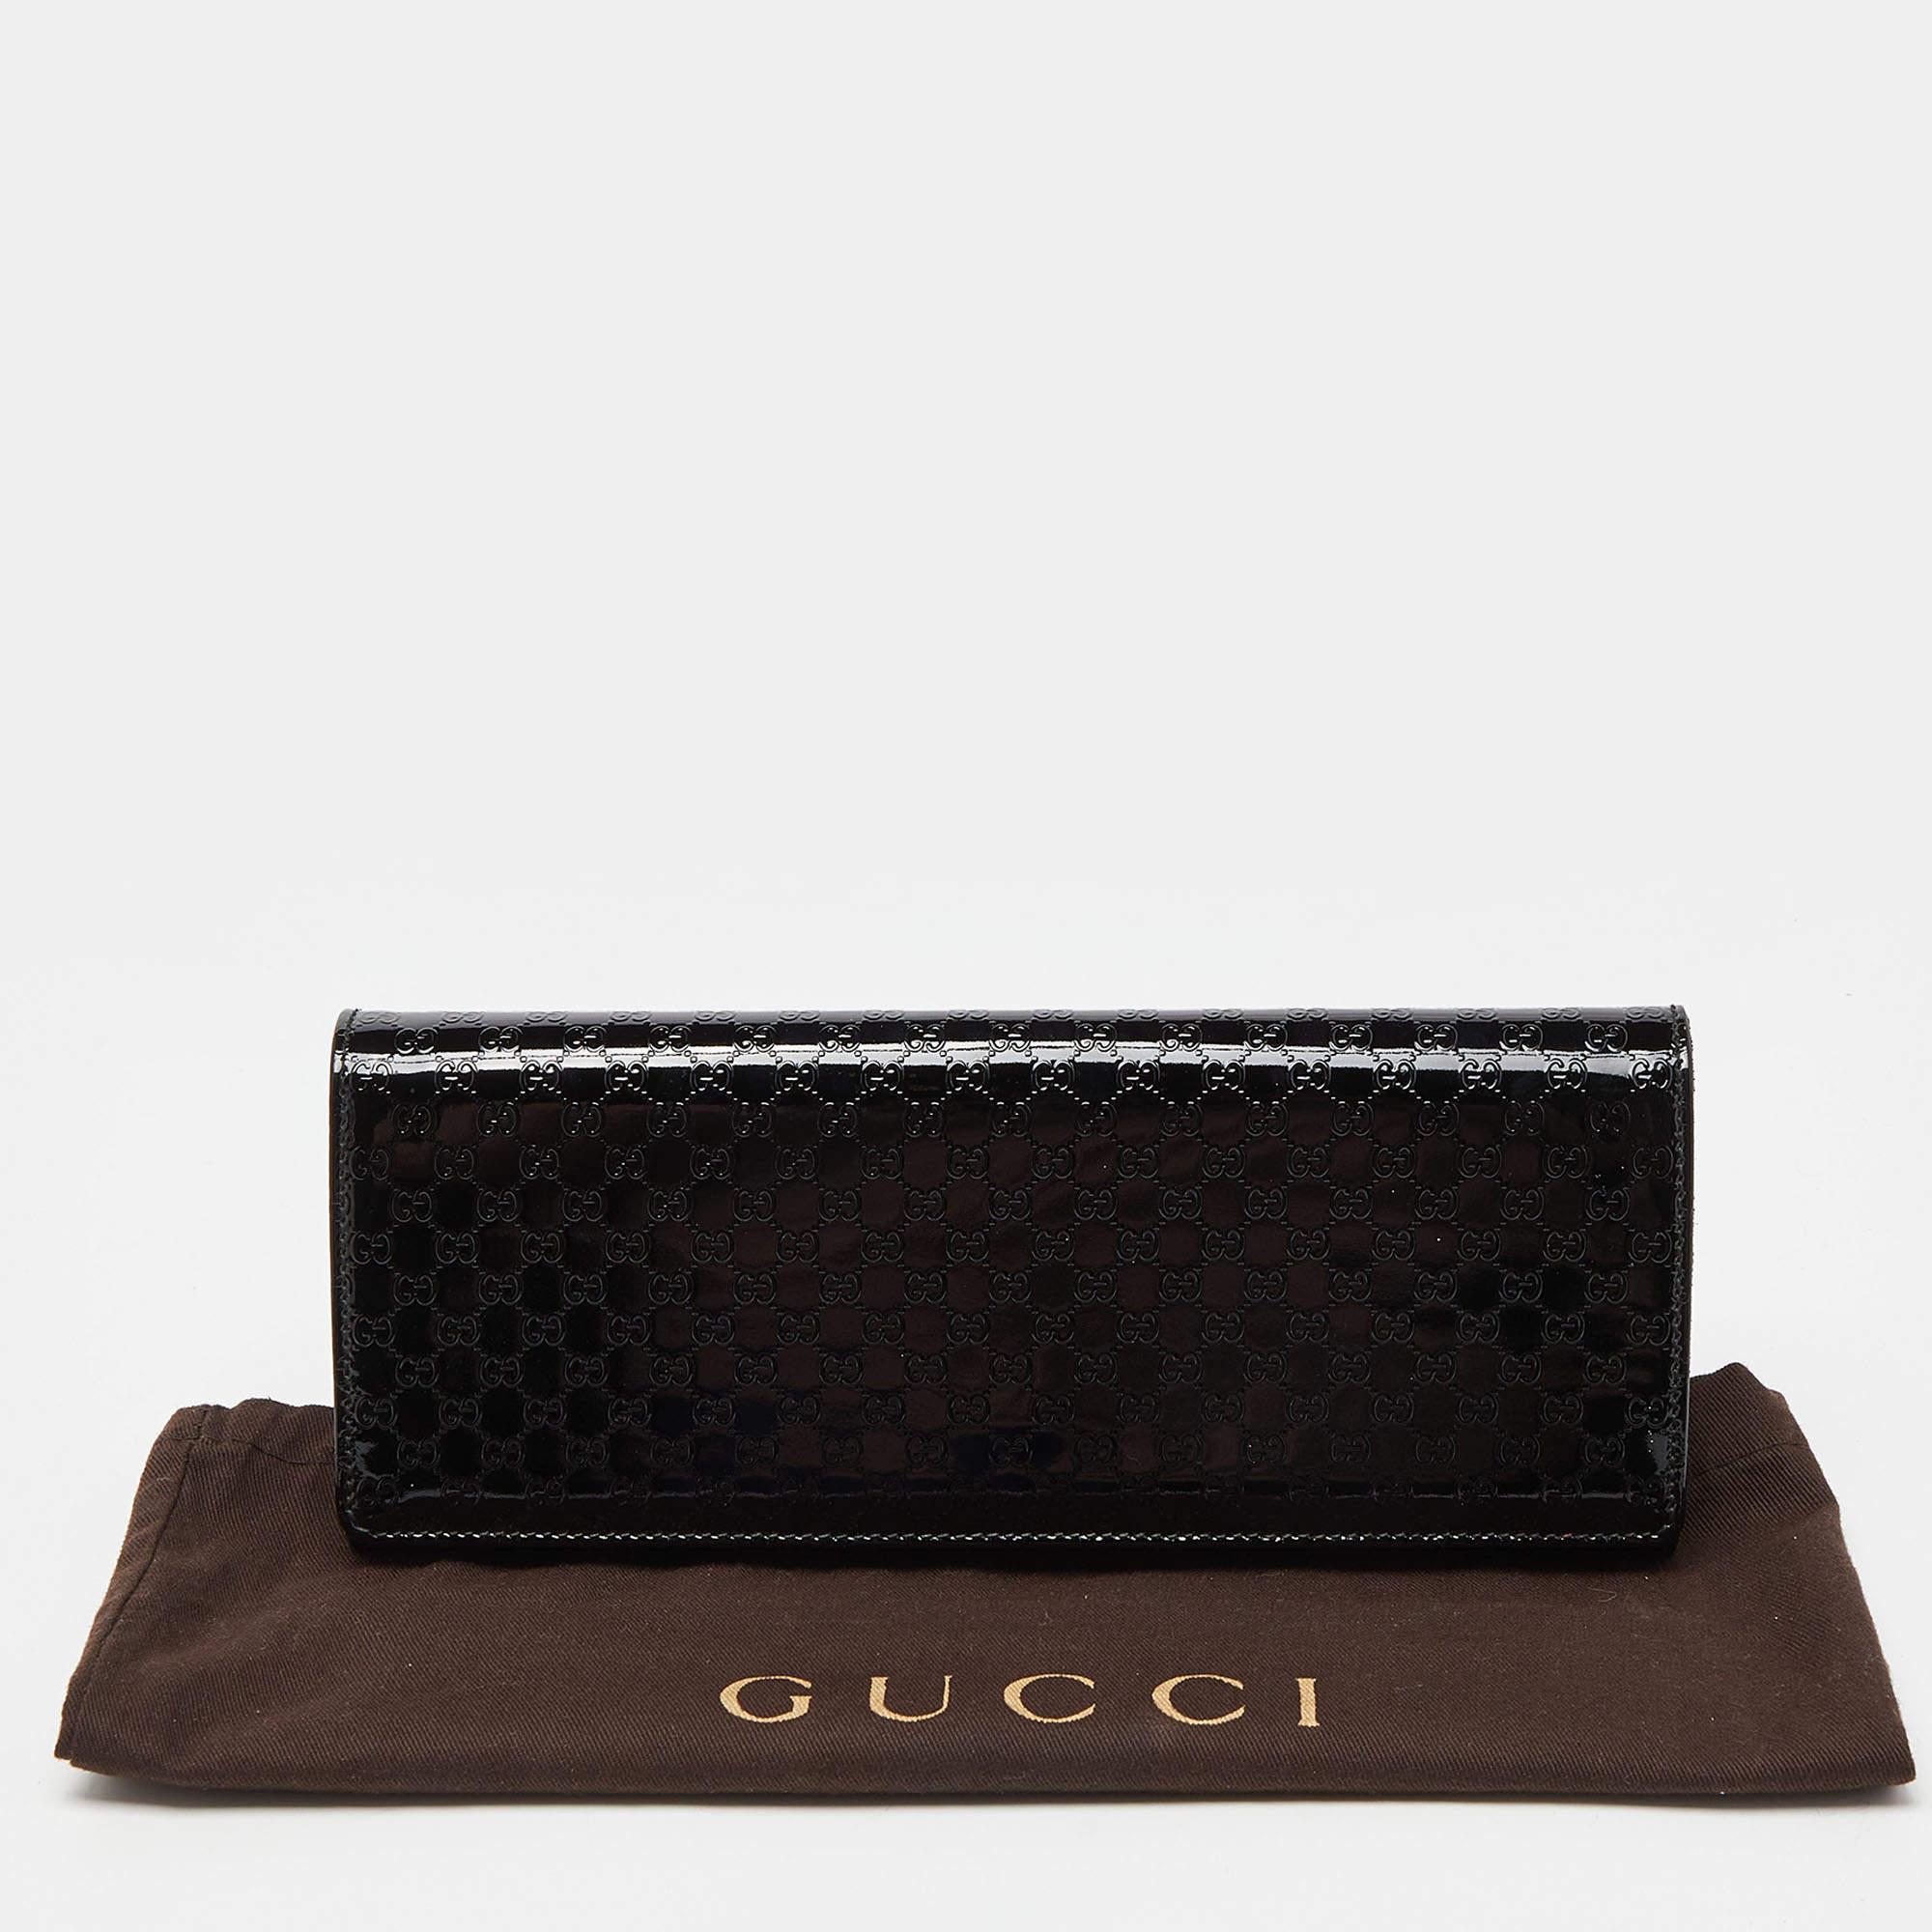 Gucci Black Microguccissima Patent Leather Small Broadway Clutch For Sale 7